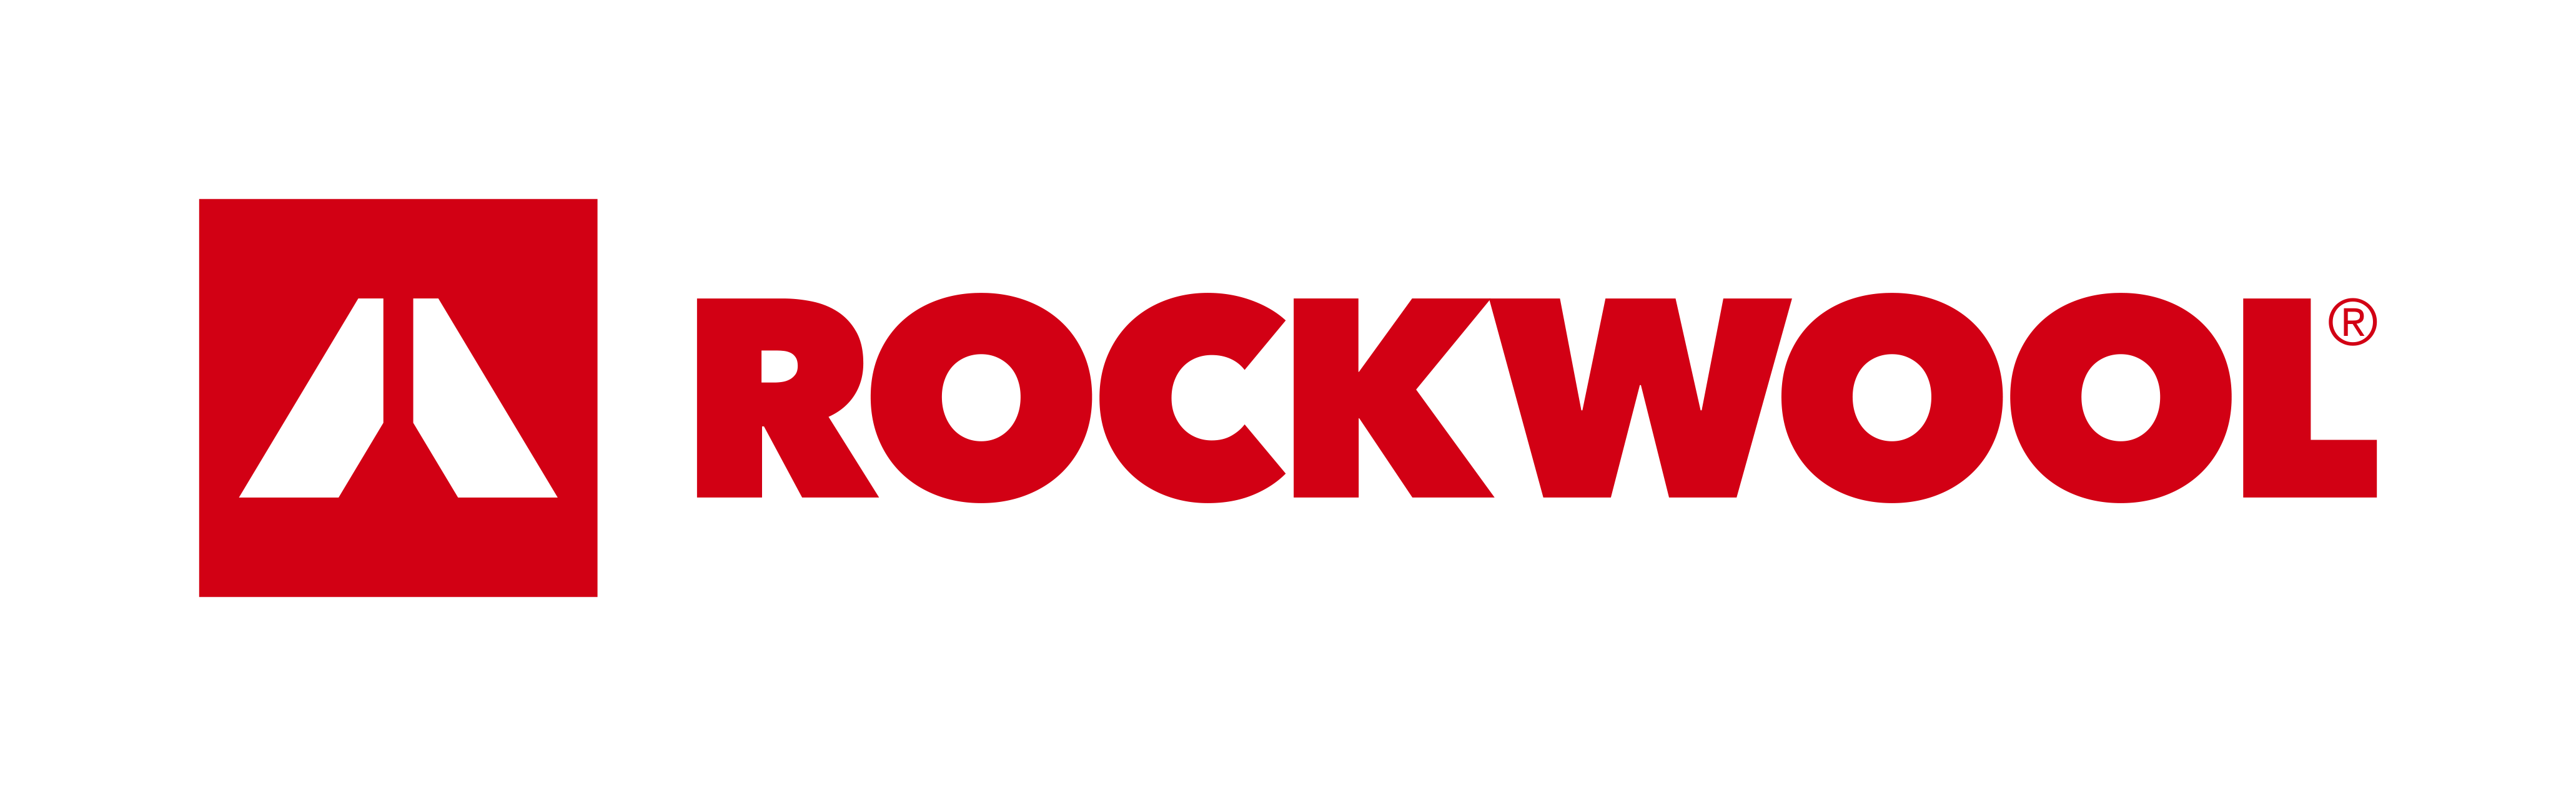 rgb-rockwool-logo-primary-colour-rgb-1